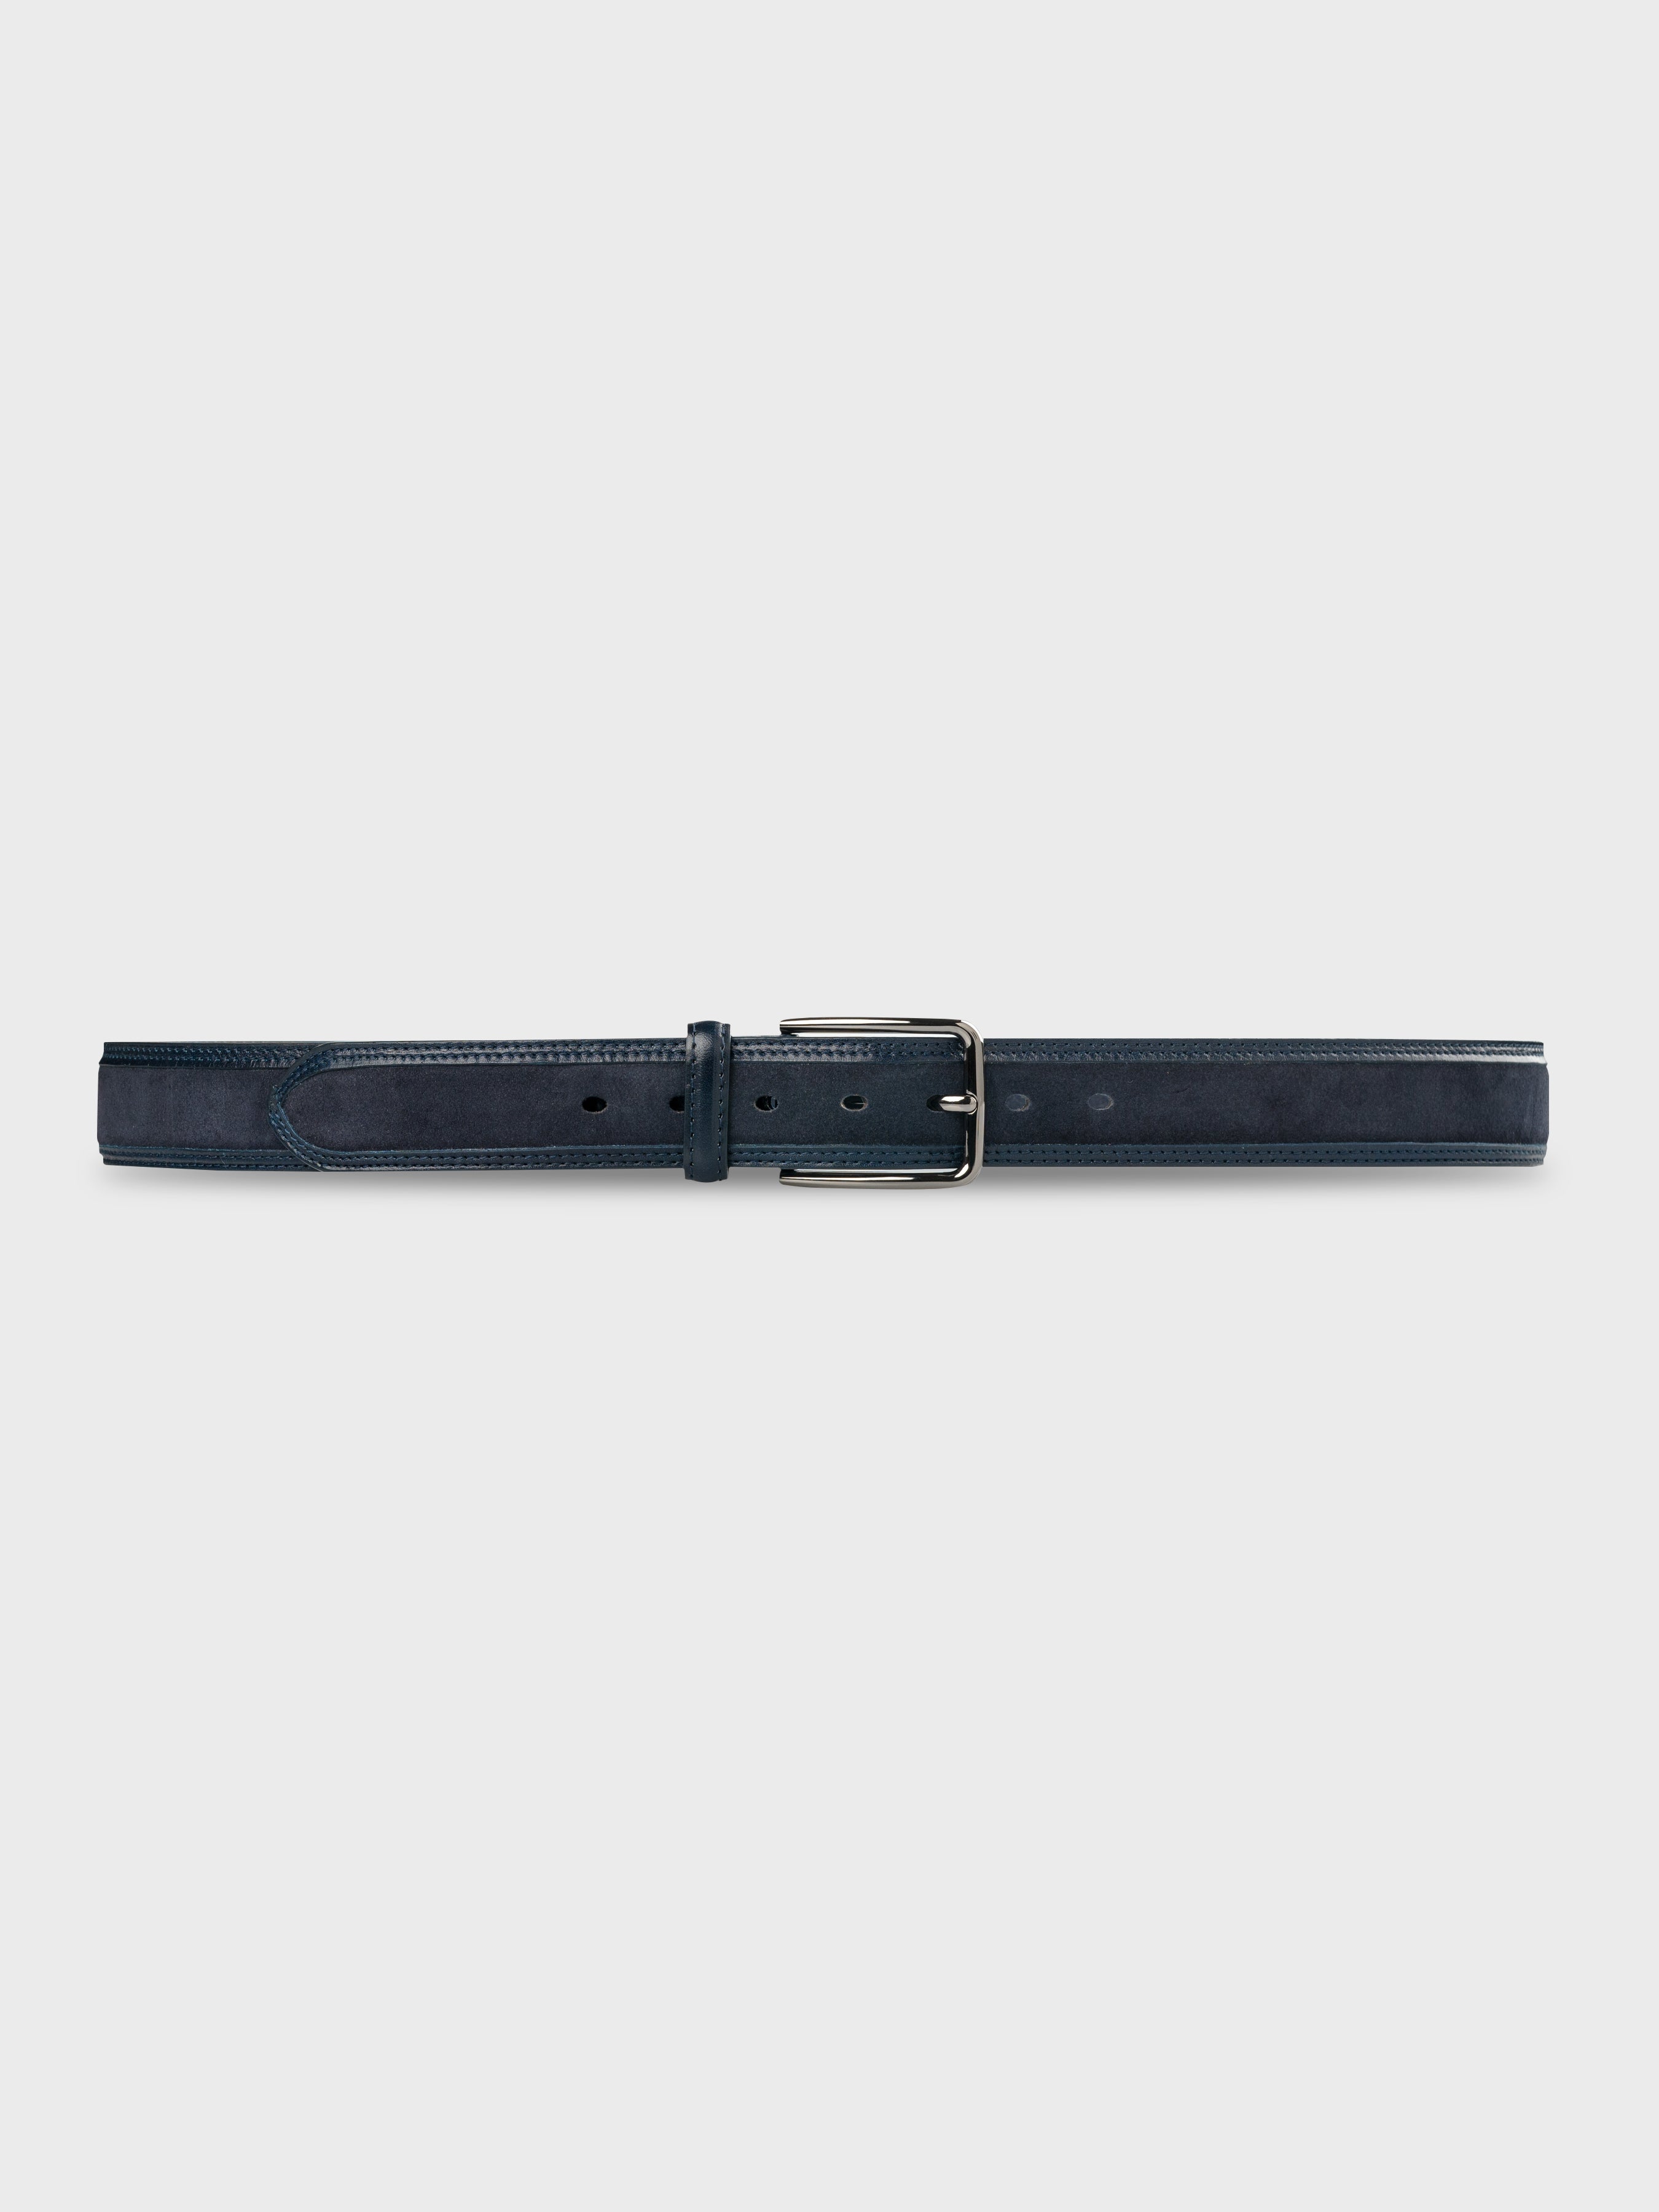 Suede Leather Belt - Black Gunmetal Buckle